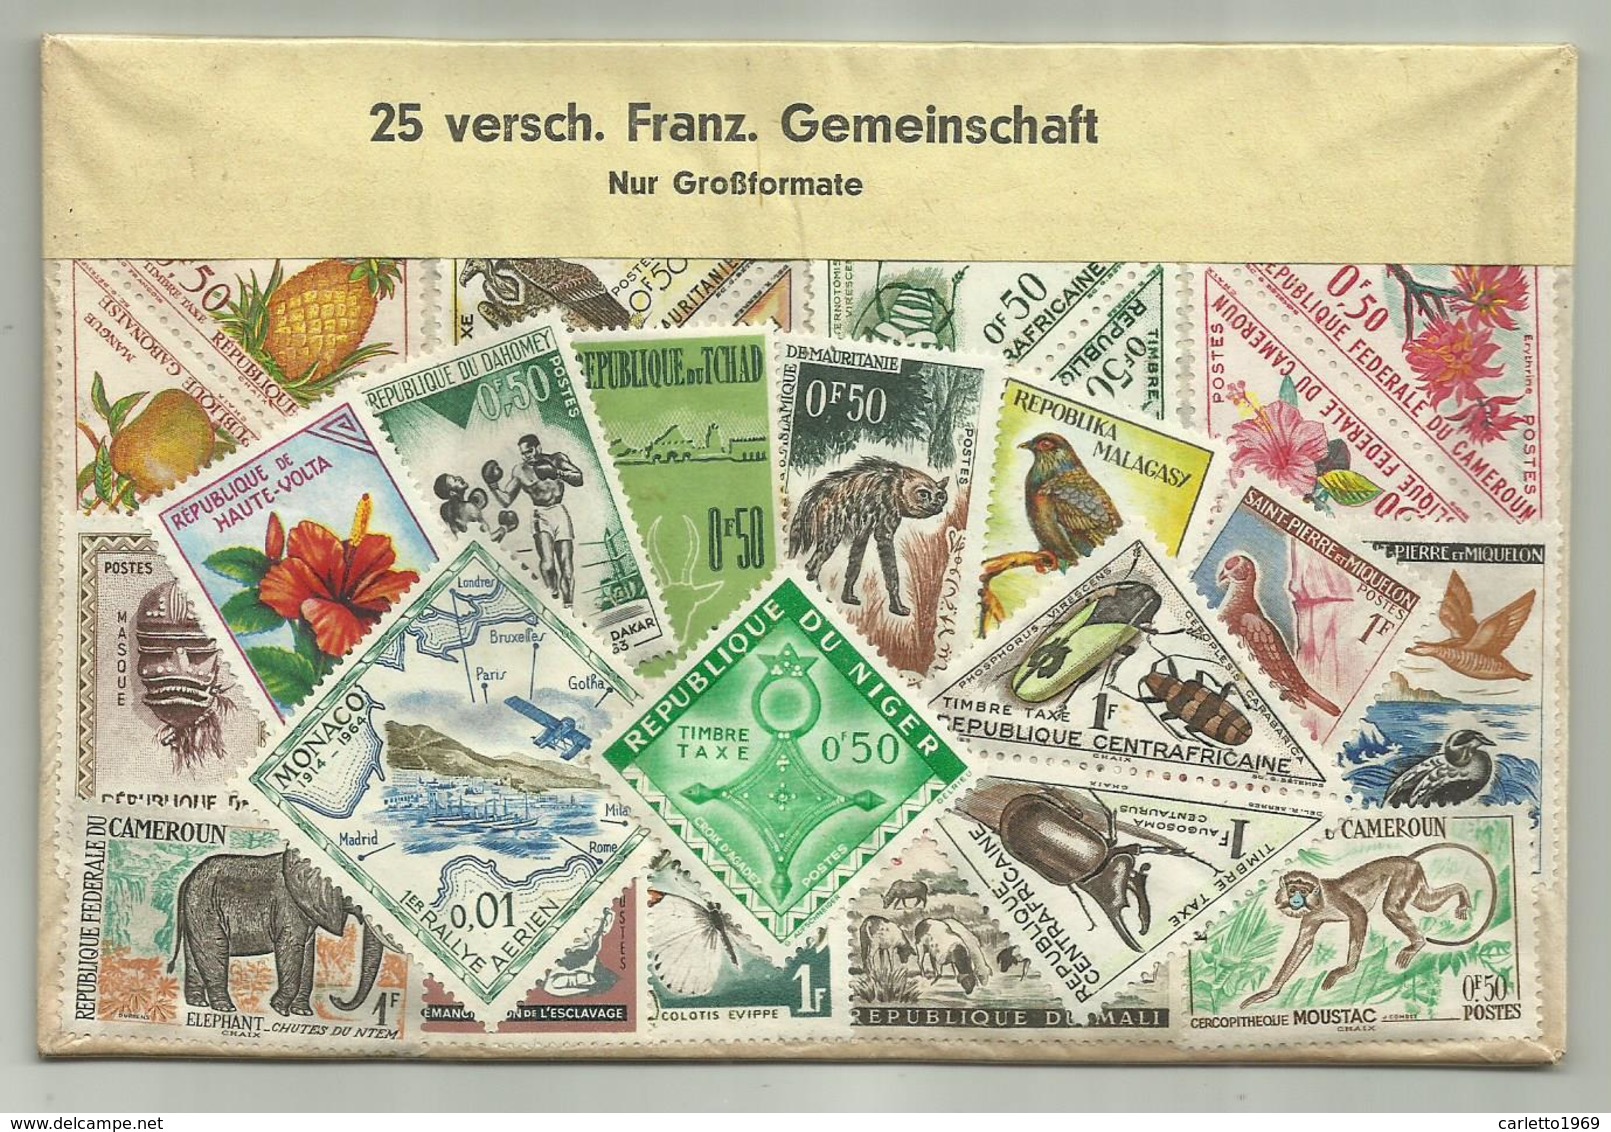 25 VERSCH. FRANZ GEMEINSCHAFT - Lots & Kiloware (mixtures) - Max. 999 Stamps